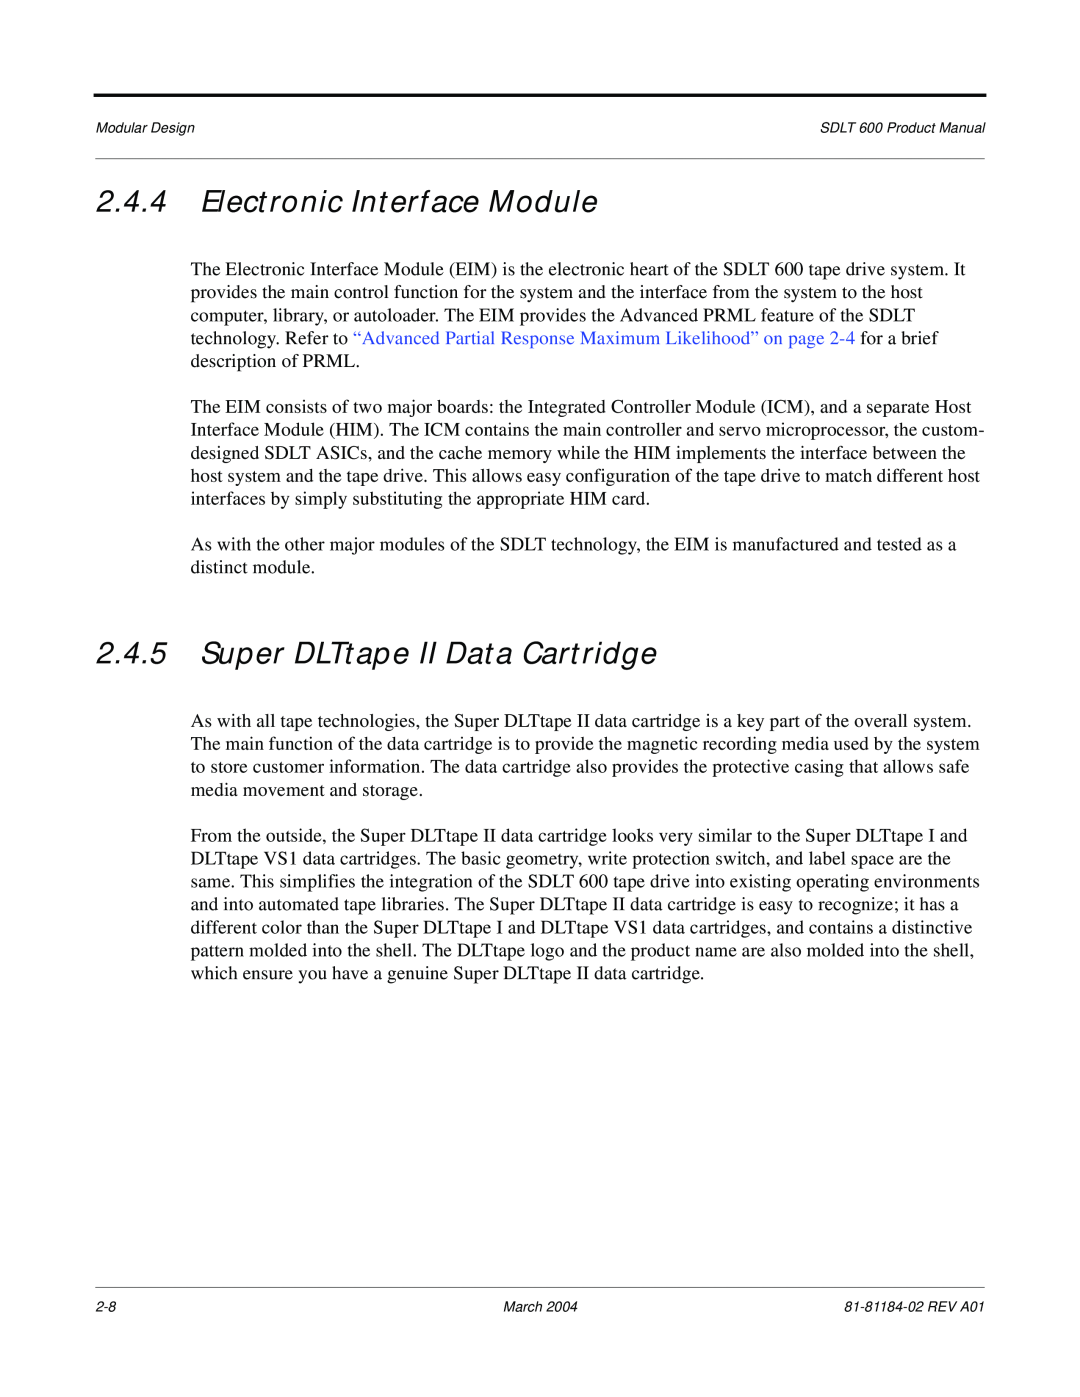 Tandberg Data 600 manual Electronic Interface Module, Super DLTtape II Data Cartridge 